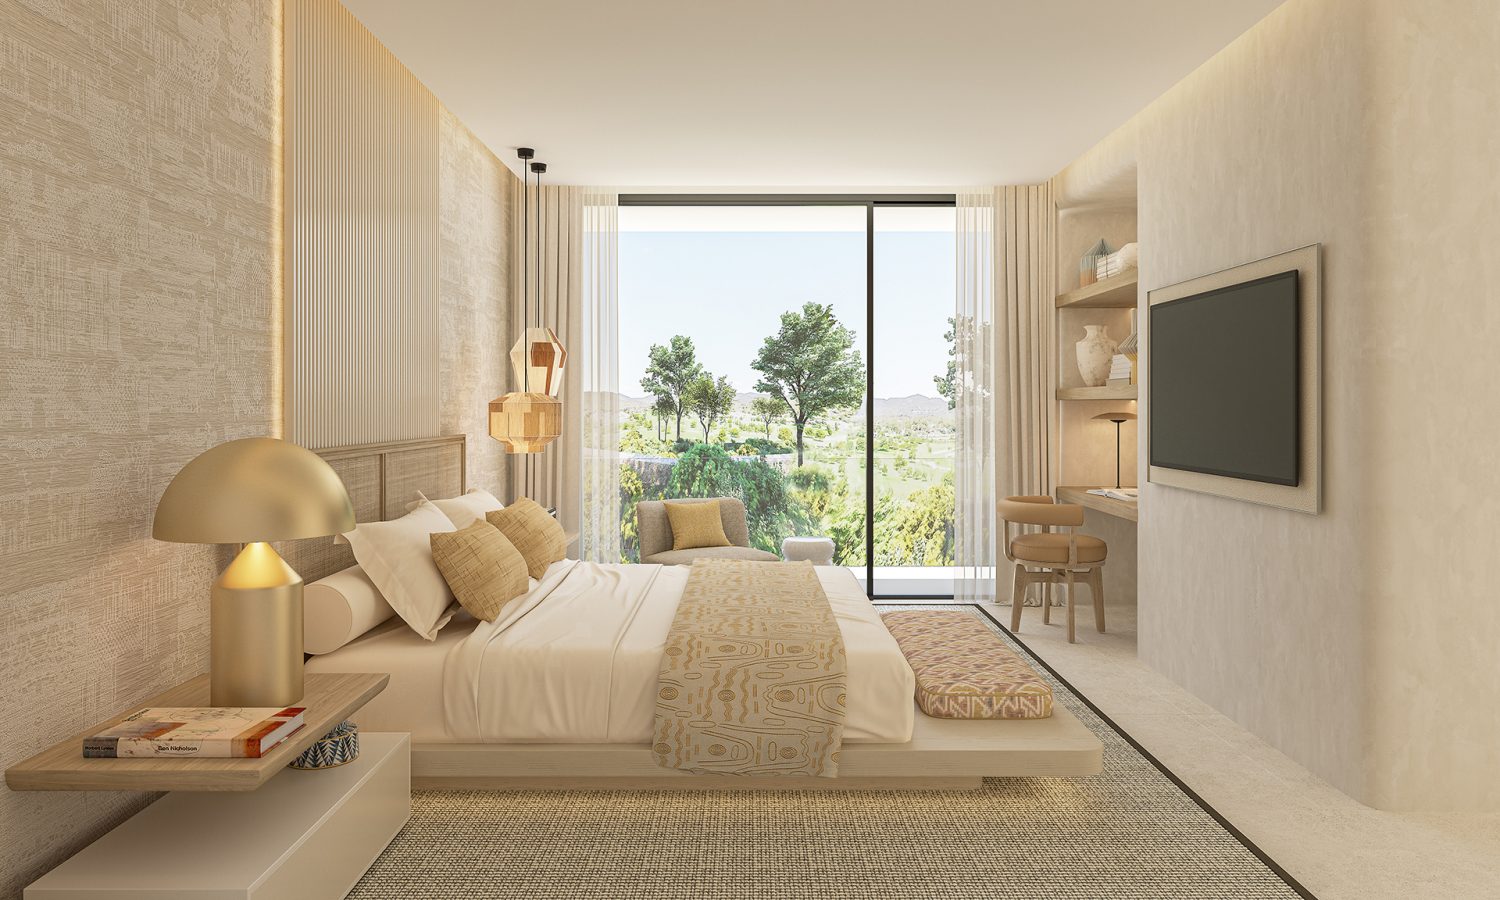 Projet de 20 villas de luxe à Roca Llisa près du golf d’Ibiza